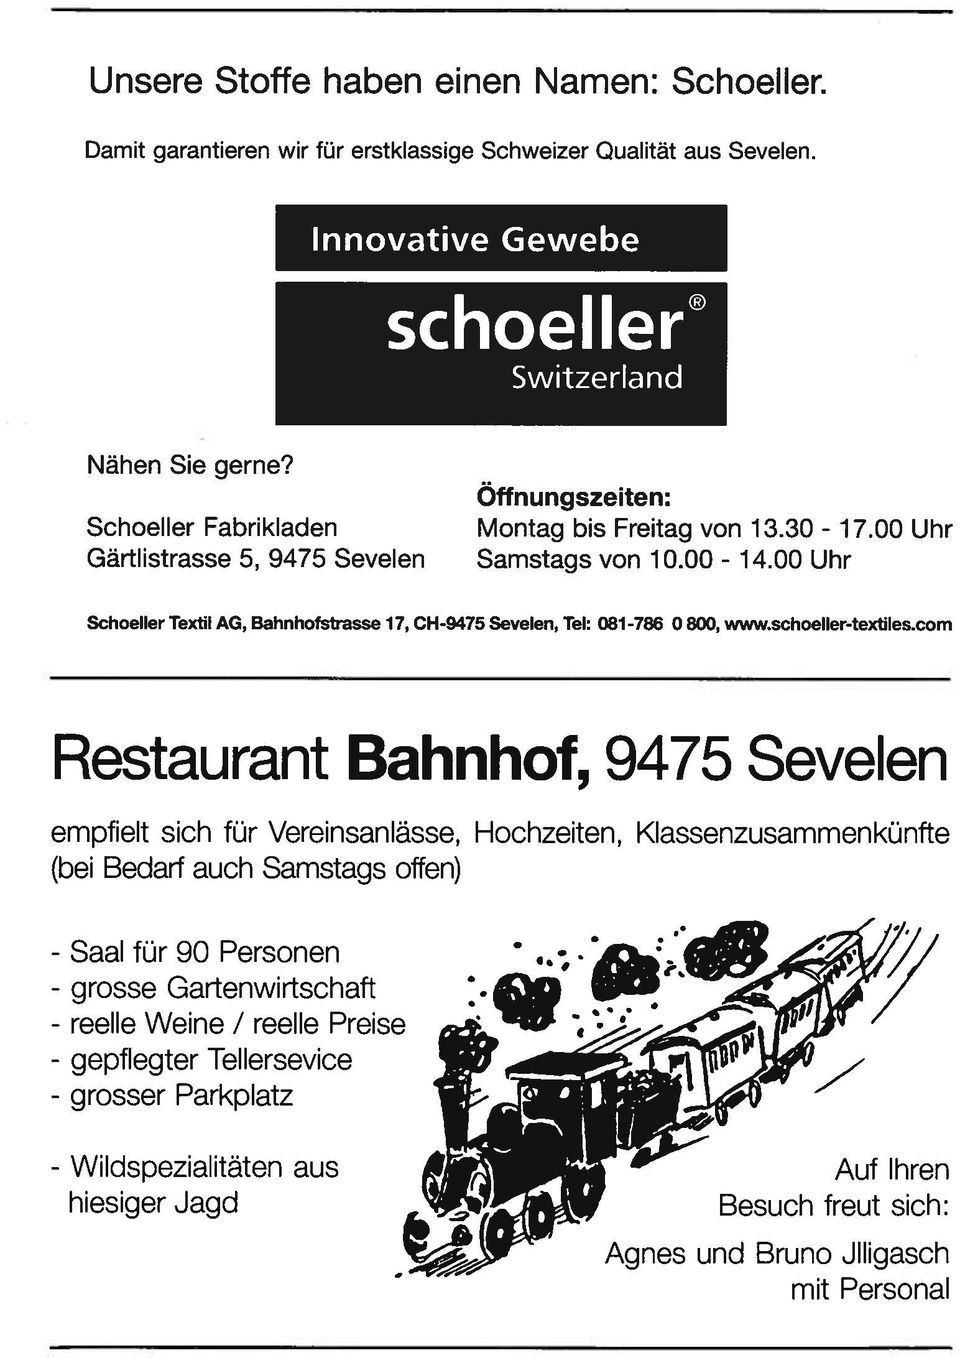 00 Uhr Schaeller Textil AG, Bahnhofstrasse 17, CH-9475 Sevelen, Tel: 081-786 0 800, www.schoeller-textiles.